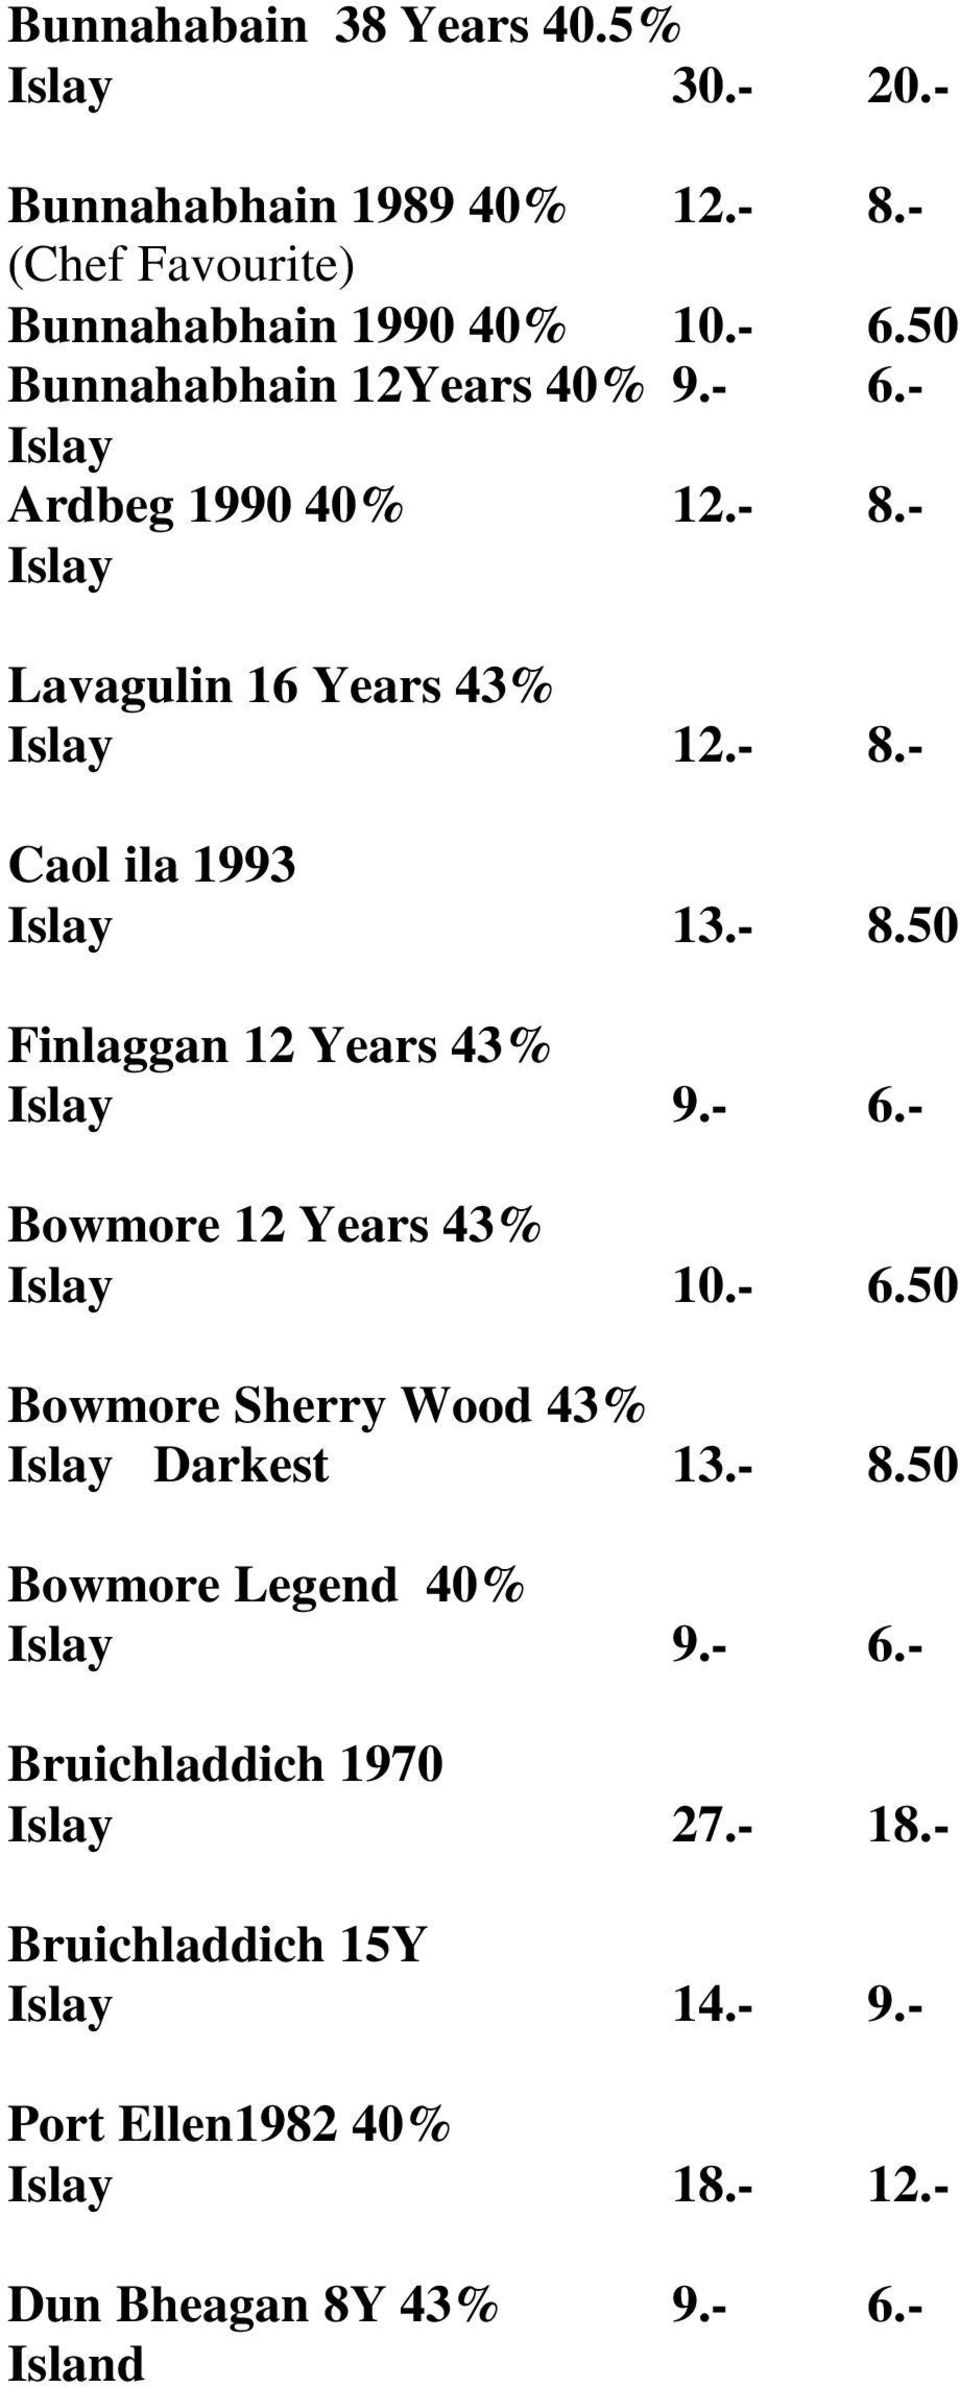 - 6.- Bowmore 12 Years 43% Islay 10.- 6.50 Bowmore Sherry Wood 43% Islay Darkest 13.- 8.50 Bowmore Legend 40% Islay 9.- 6.- Bruichladdich 1970 Islay 27.